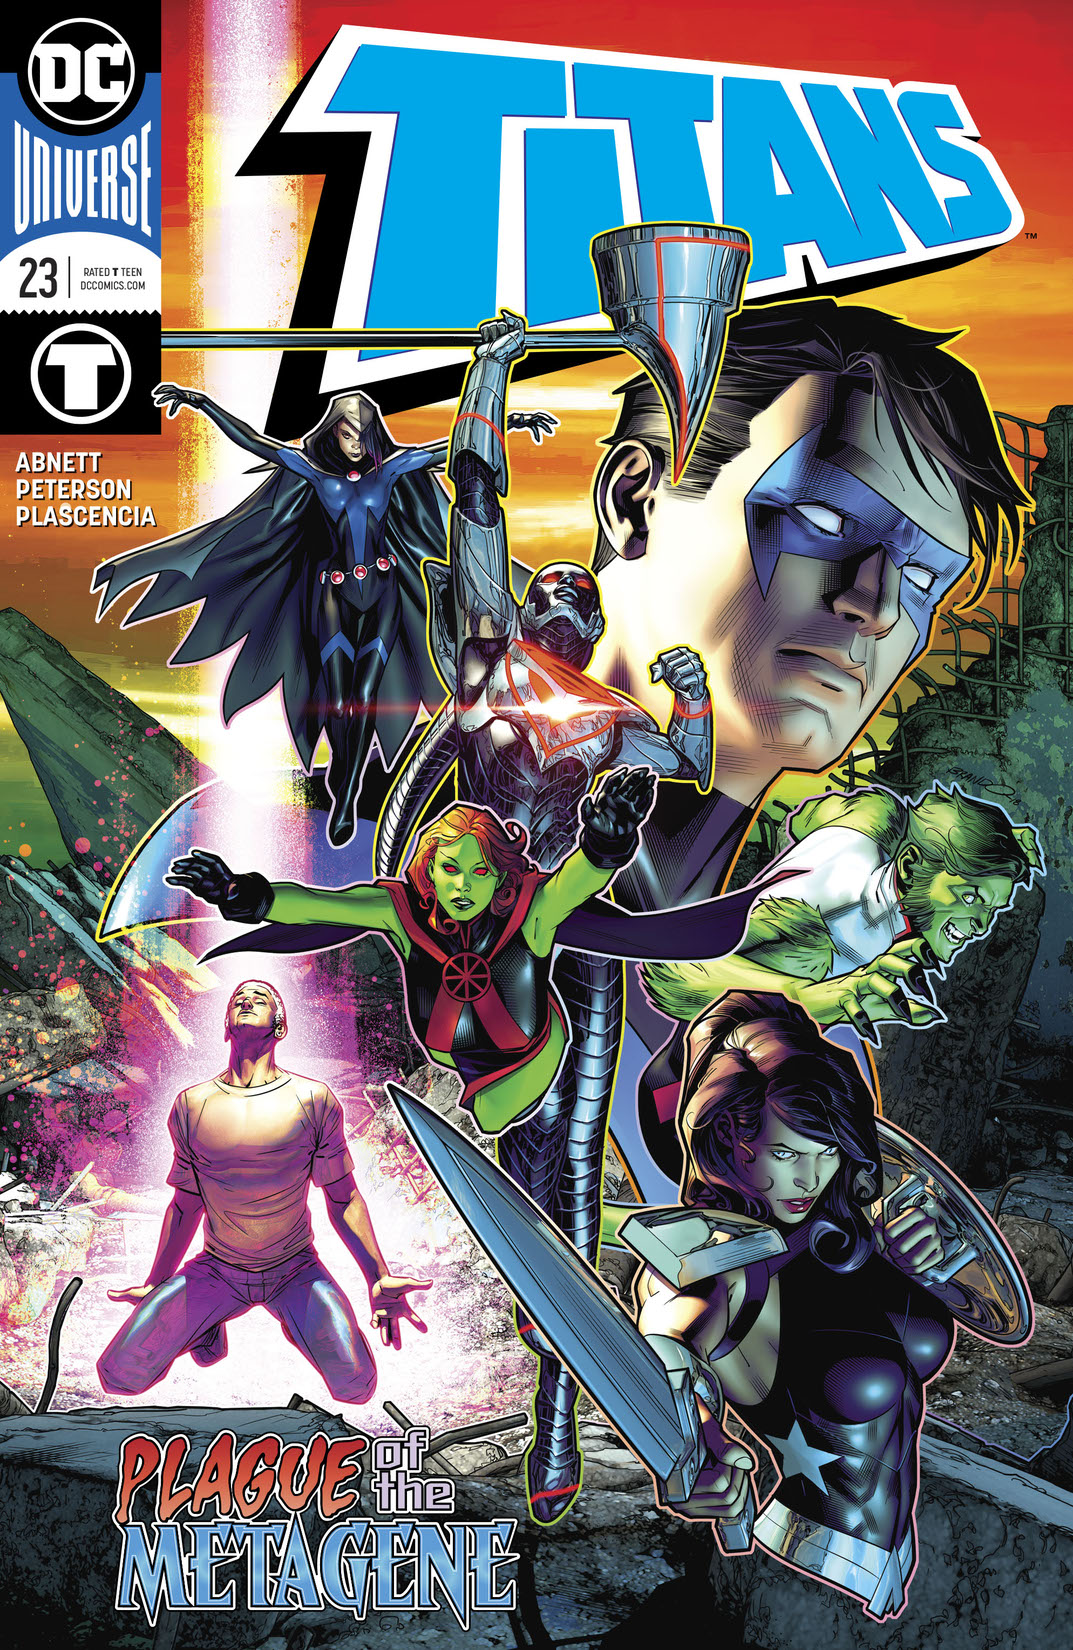 Titans (2016-) #23 preview images